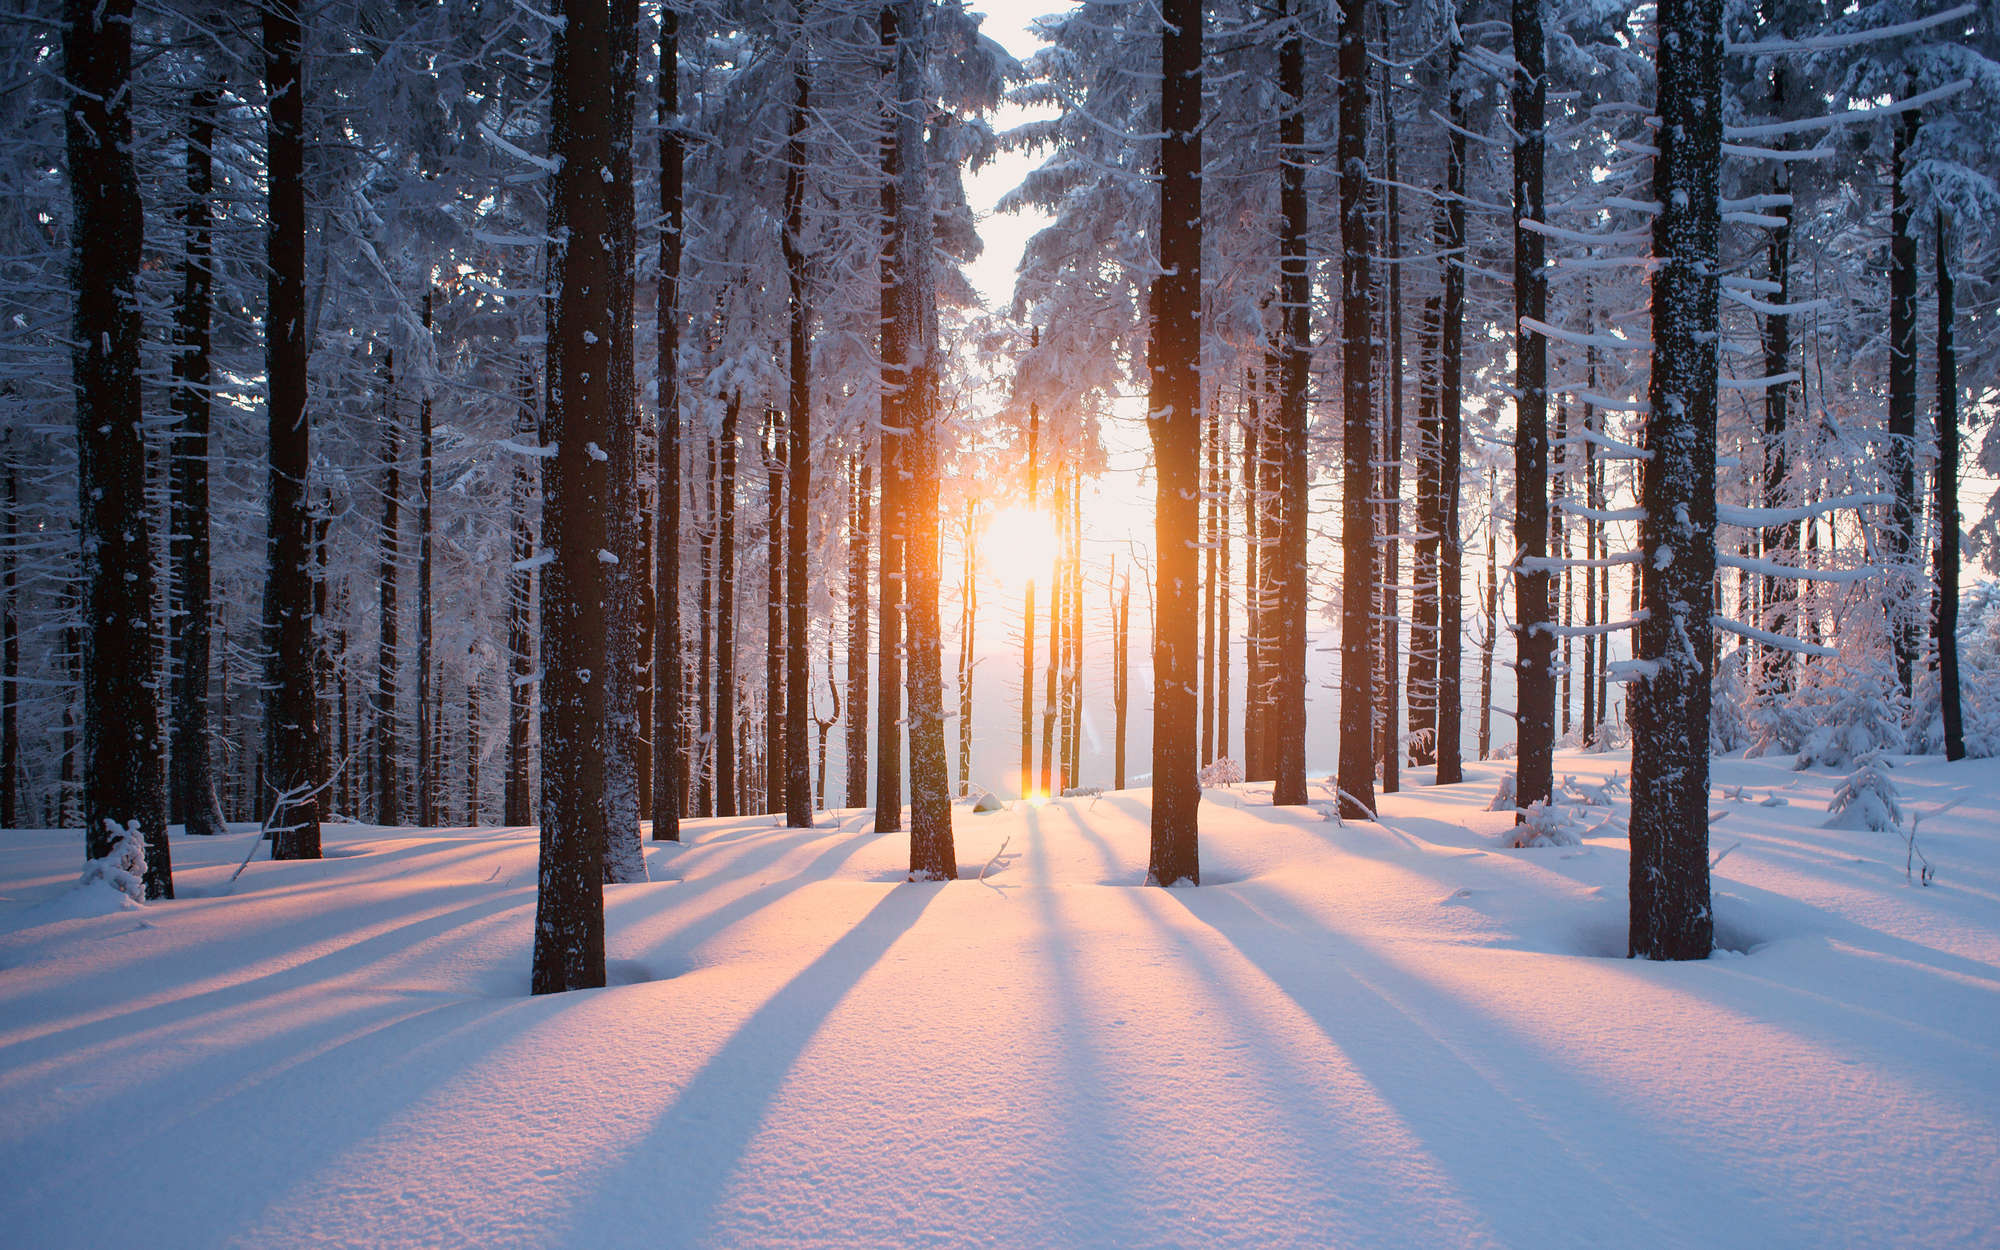             Fotomurali Neve nella foresta invernale - Pile liscio opaco
        